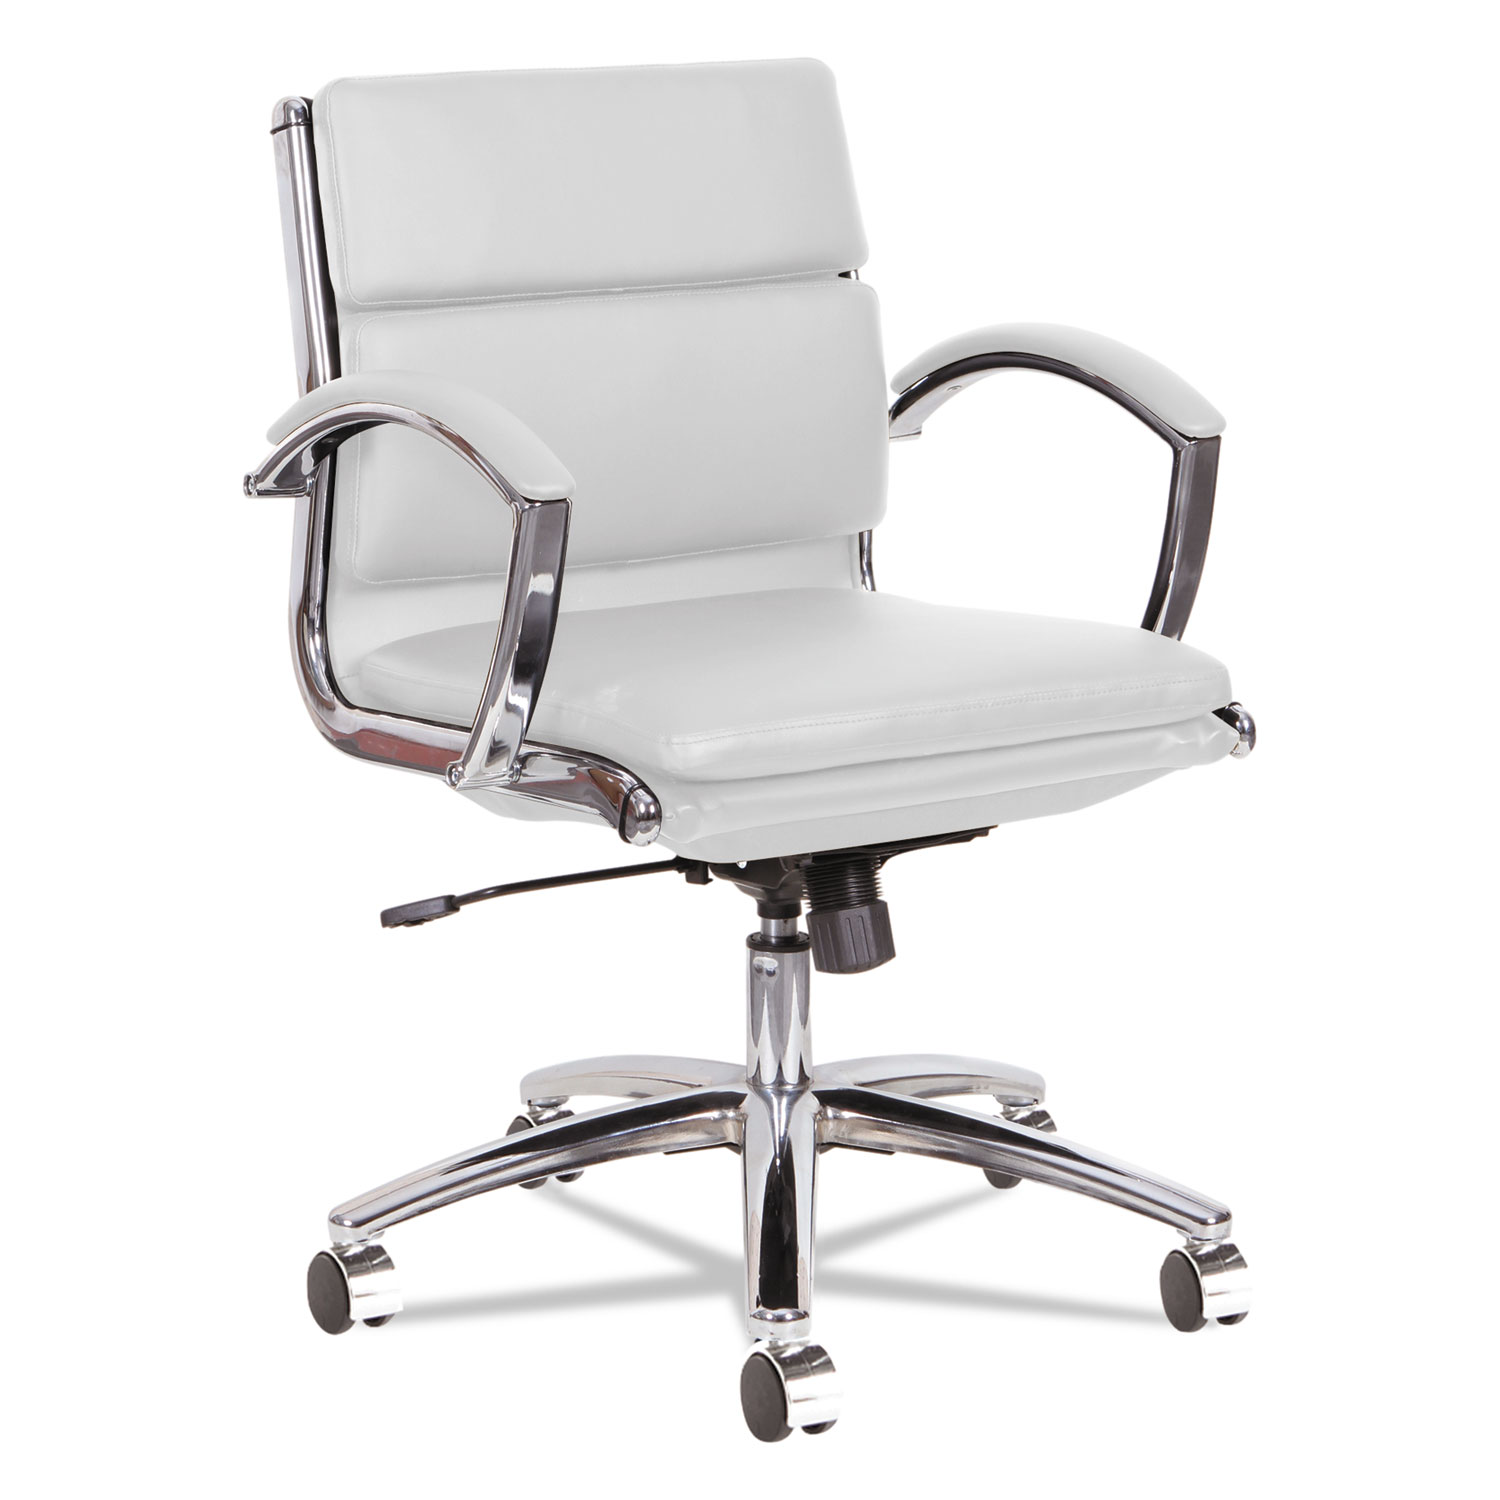 Alera Neratoli Low-Back Slim Profile Chair, White Faux Leather, Chrome Frame